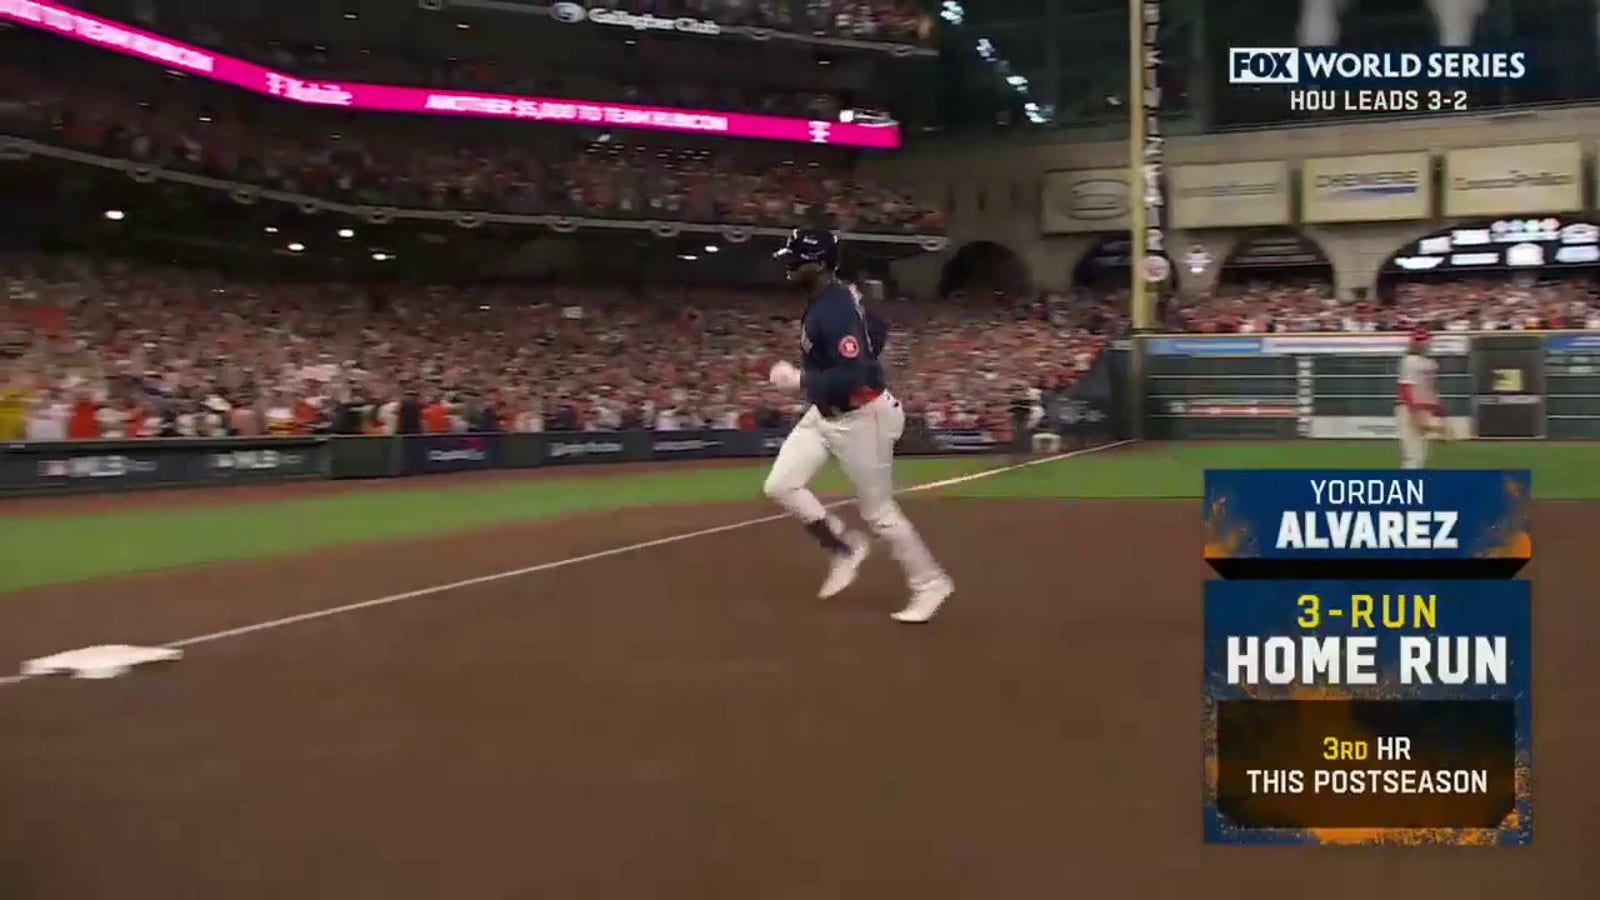 Yordan Alvarez hits a three-run home run to put the Astros up 3-1